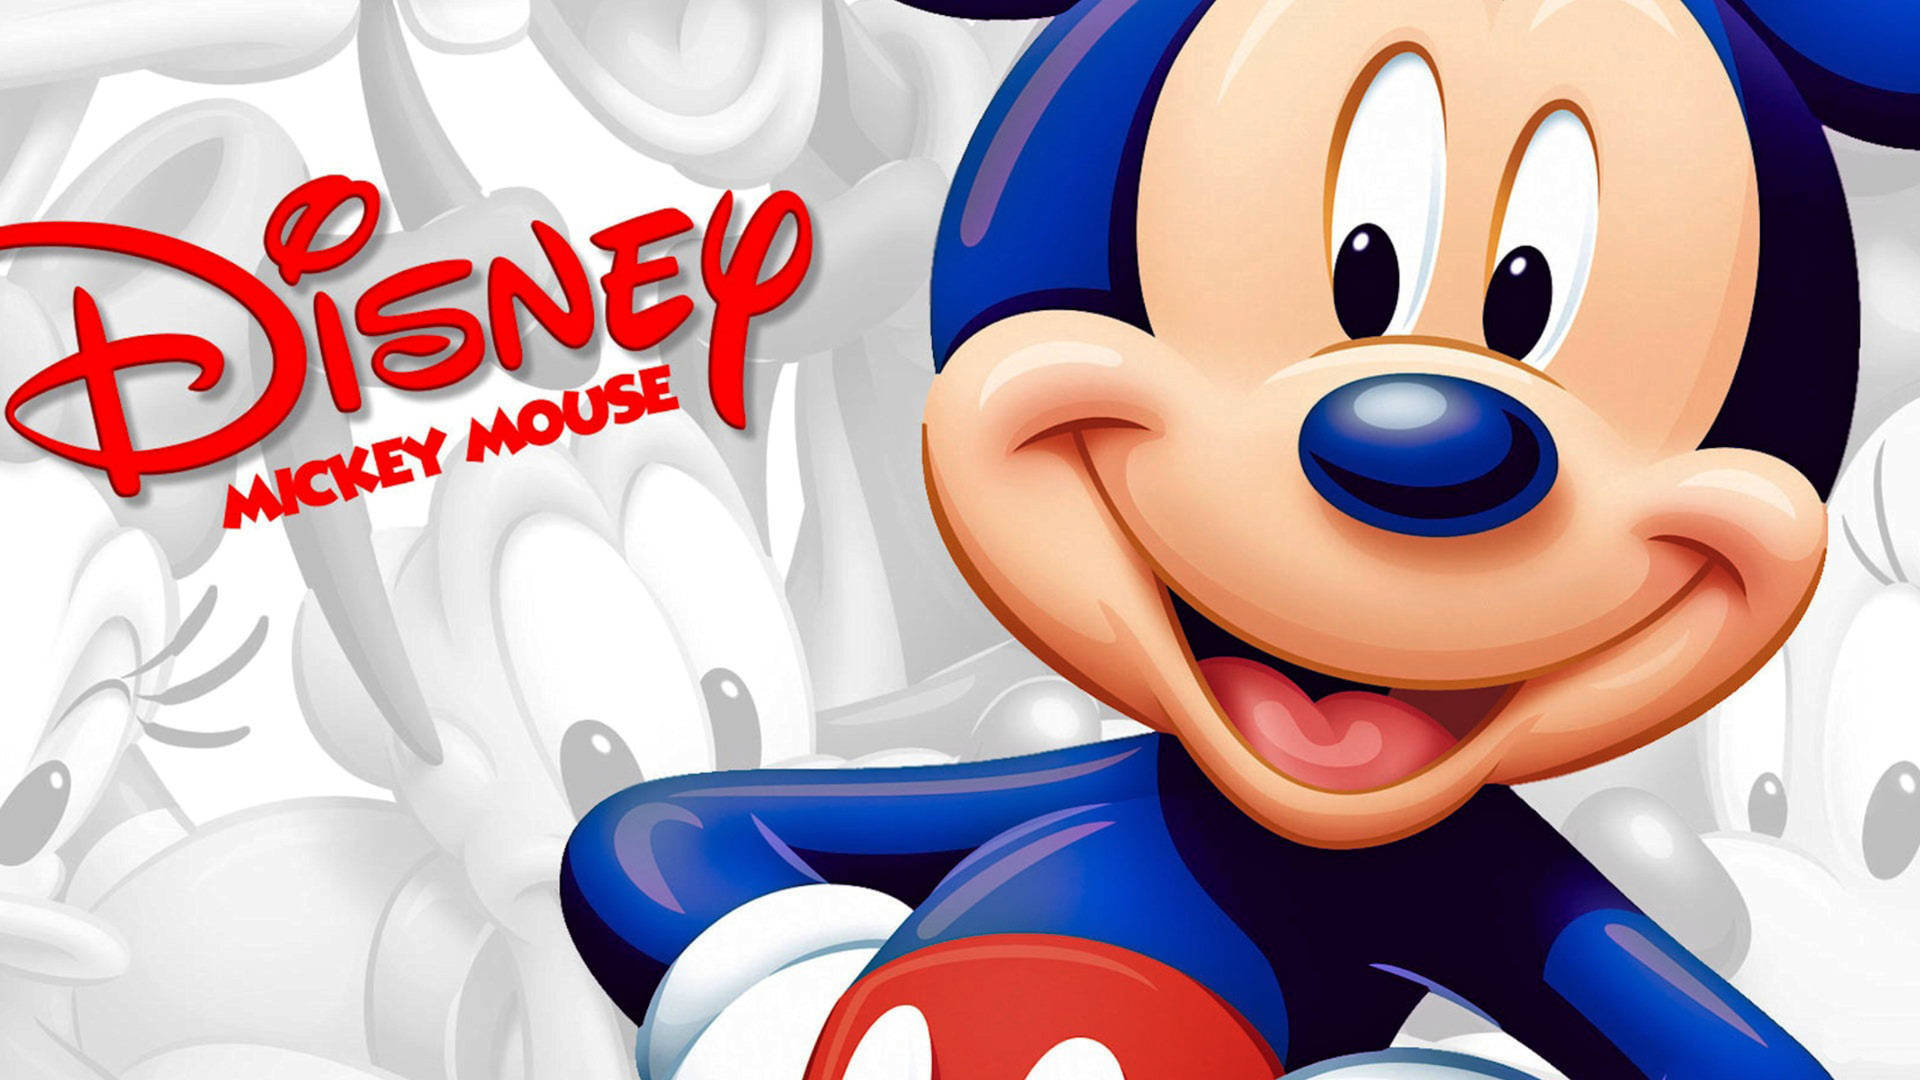 2560x1440 Disney Mickey Mouse Maskot Wallpaper